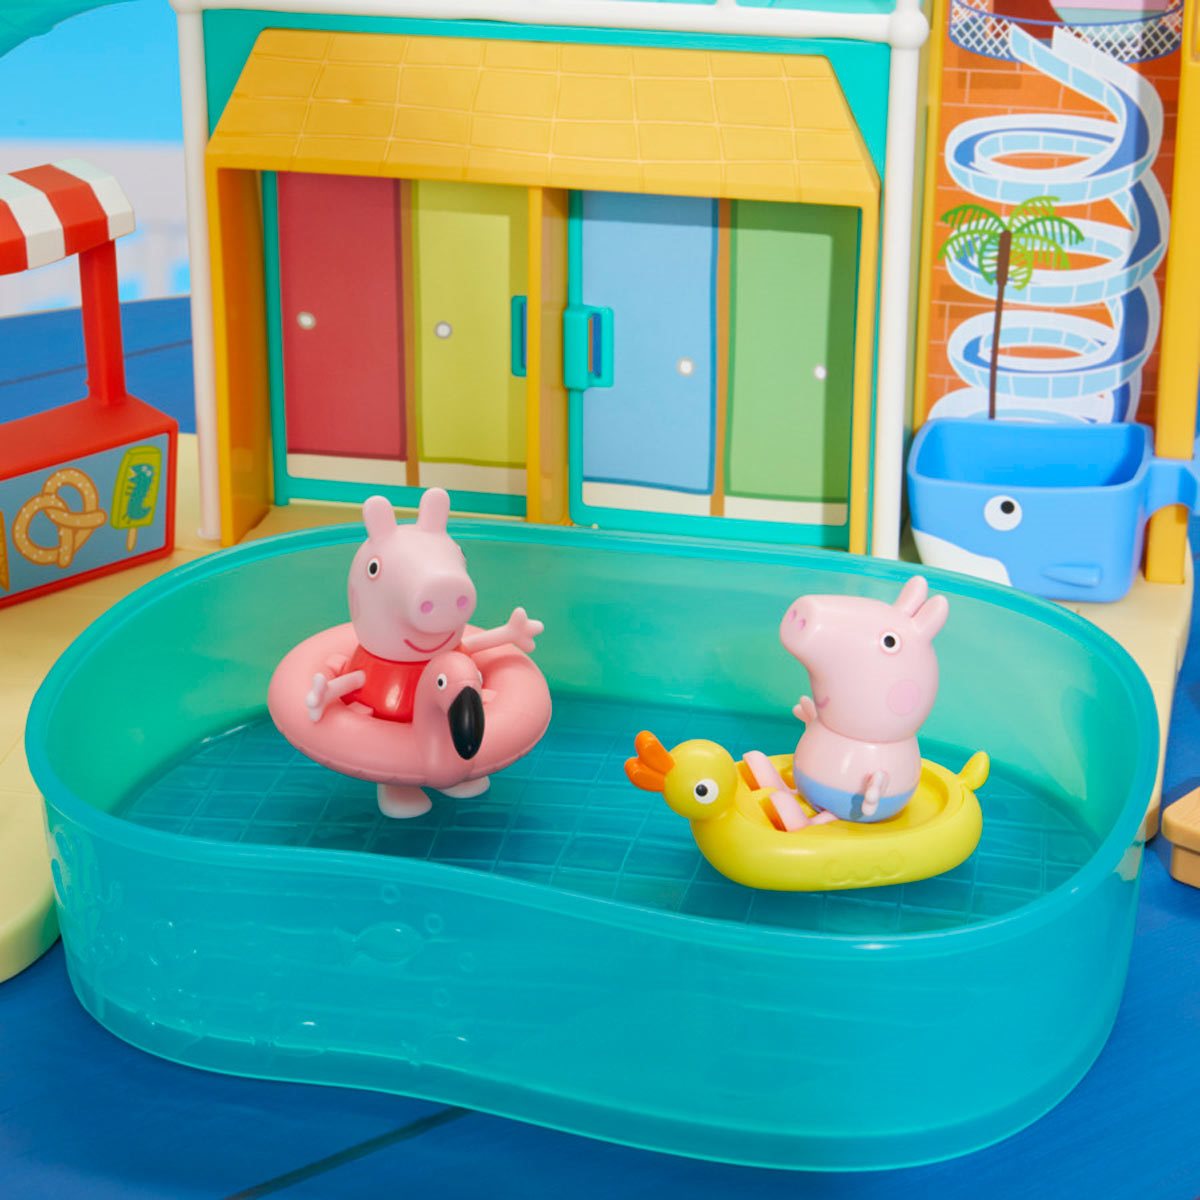 Peppa Pig's Peppa's House Bath Playset - Entertainment Earth